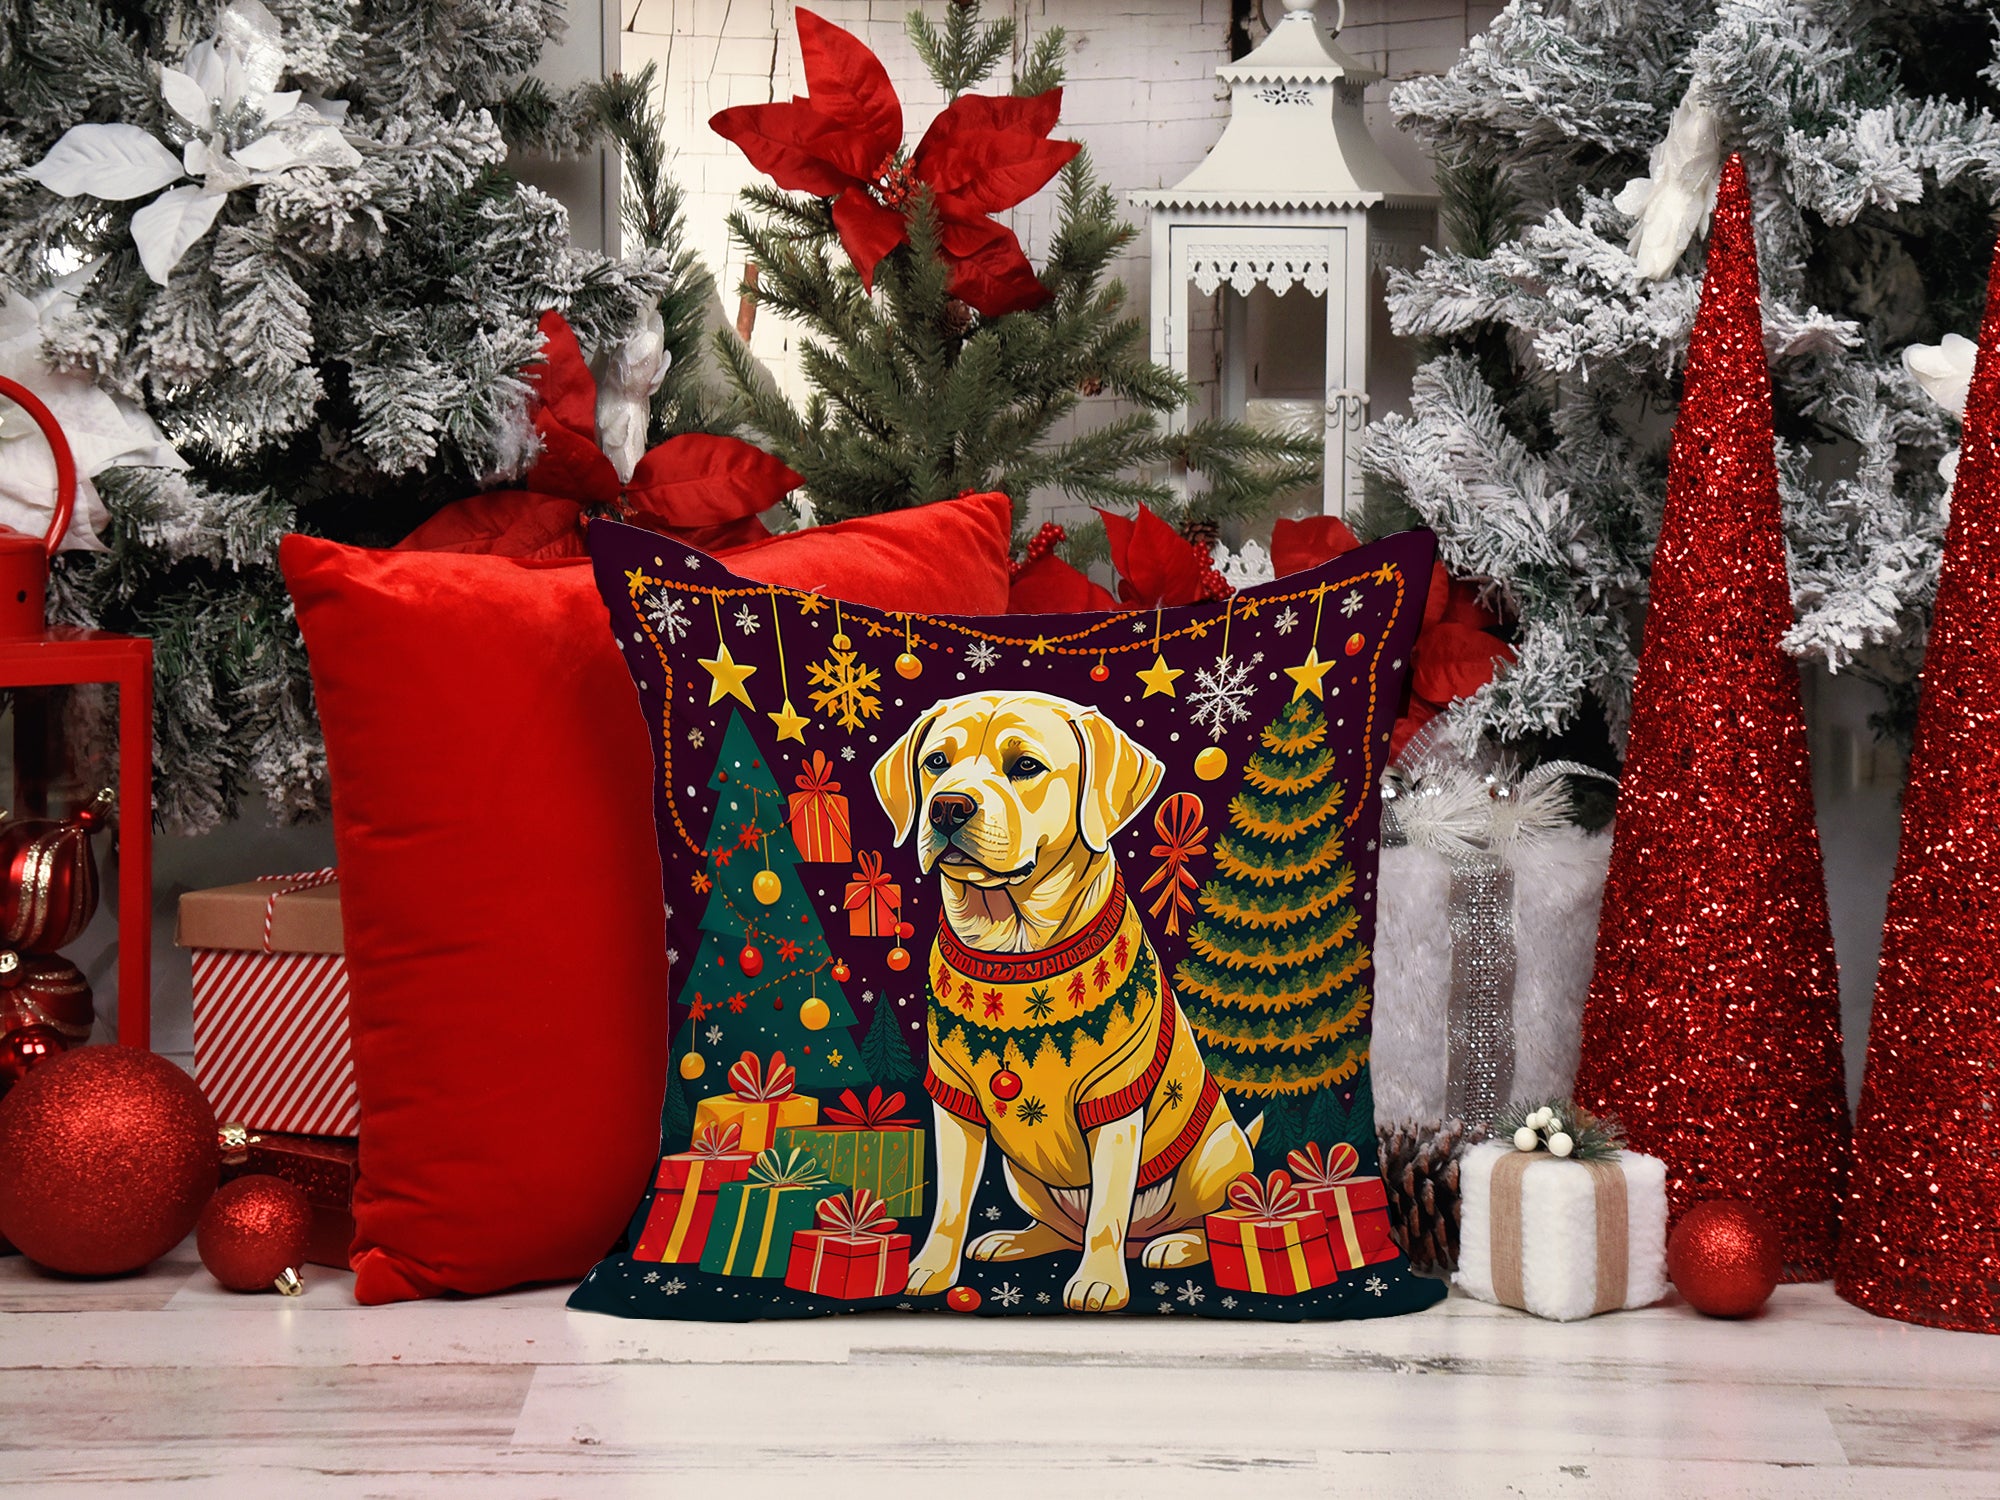 Buy this Yellow Labrador Retriever Christmas Fabric Decorative Pillow